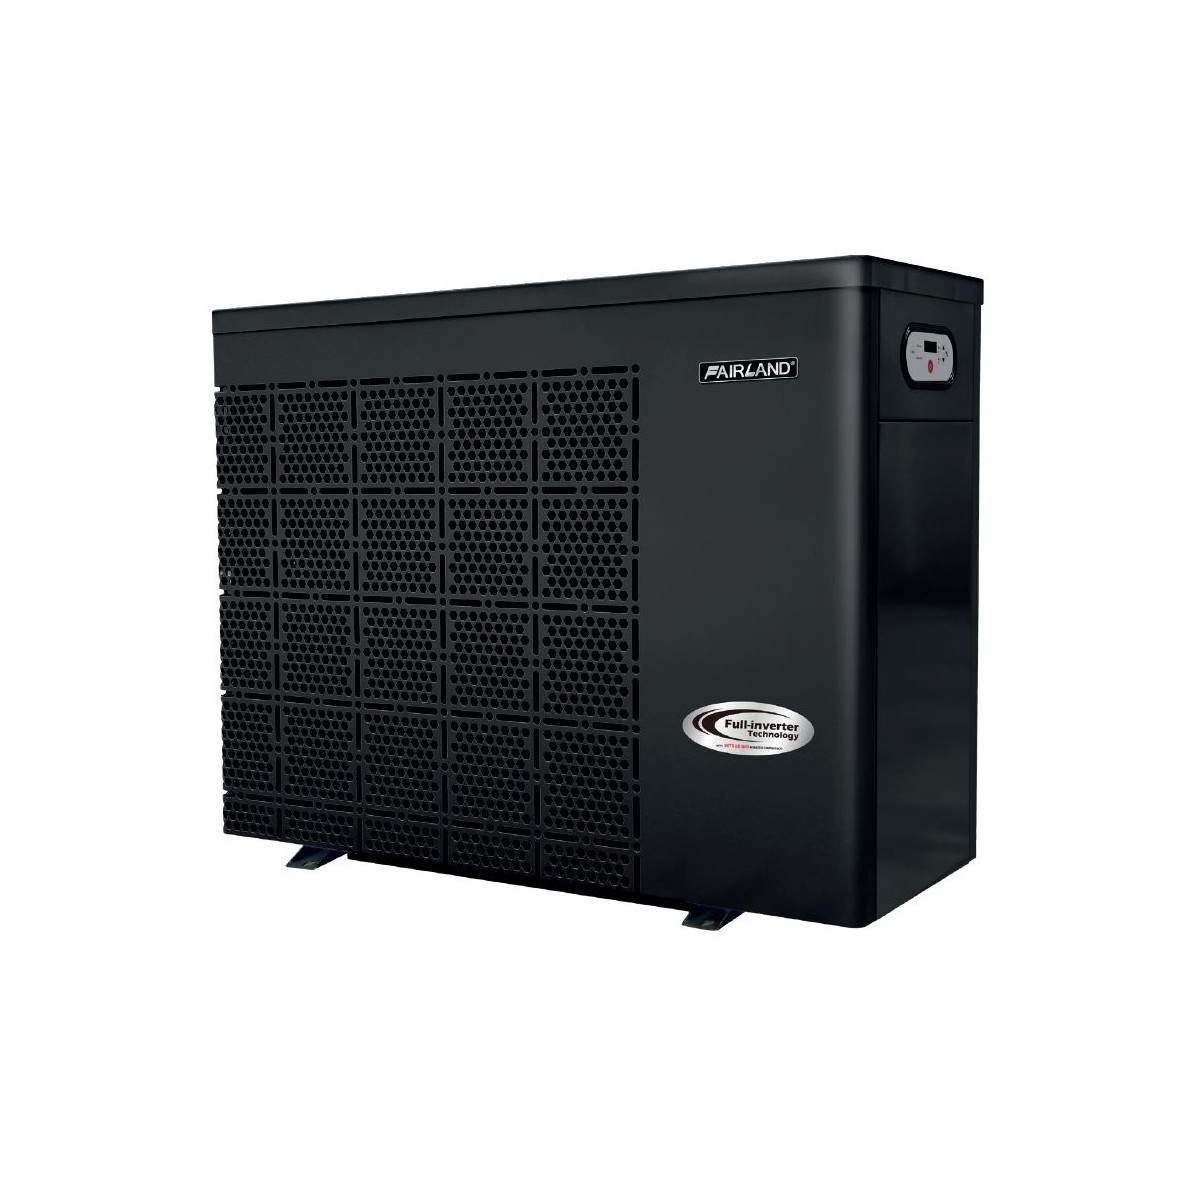 Heat pump Inverter Plus by Fairland -Power output 27.3 kw -